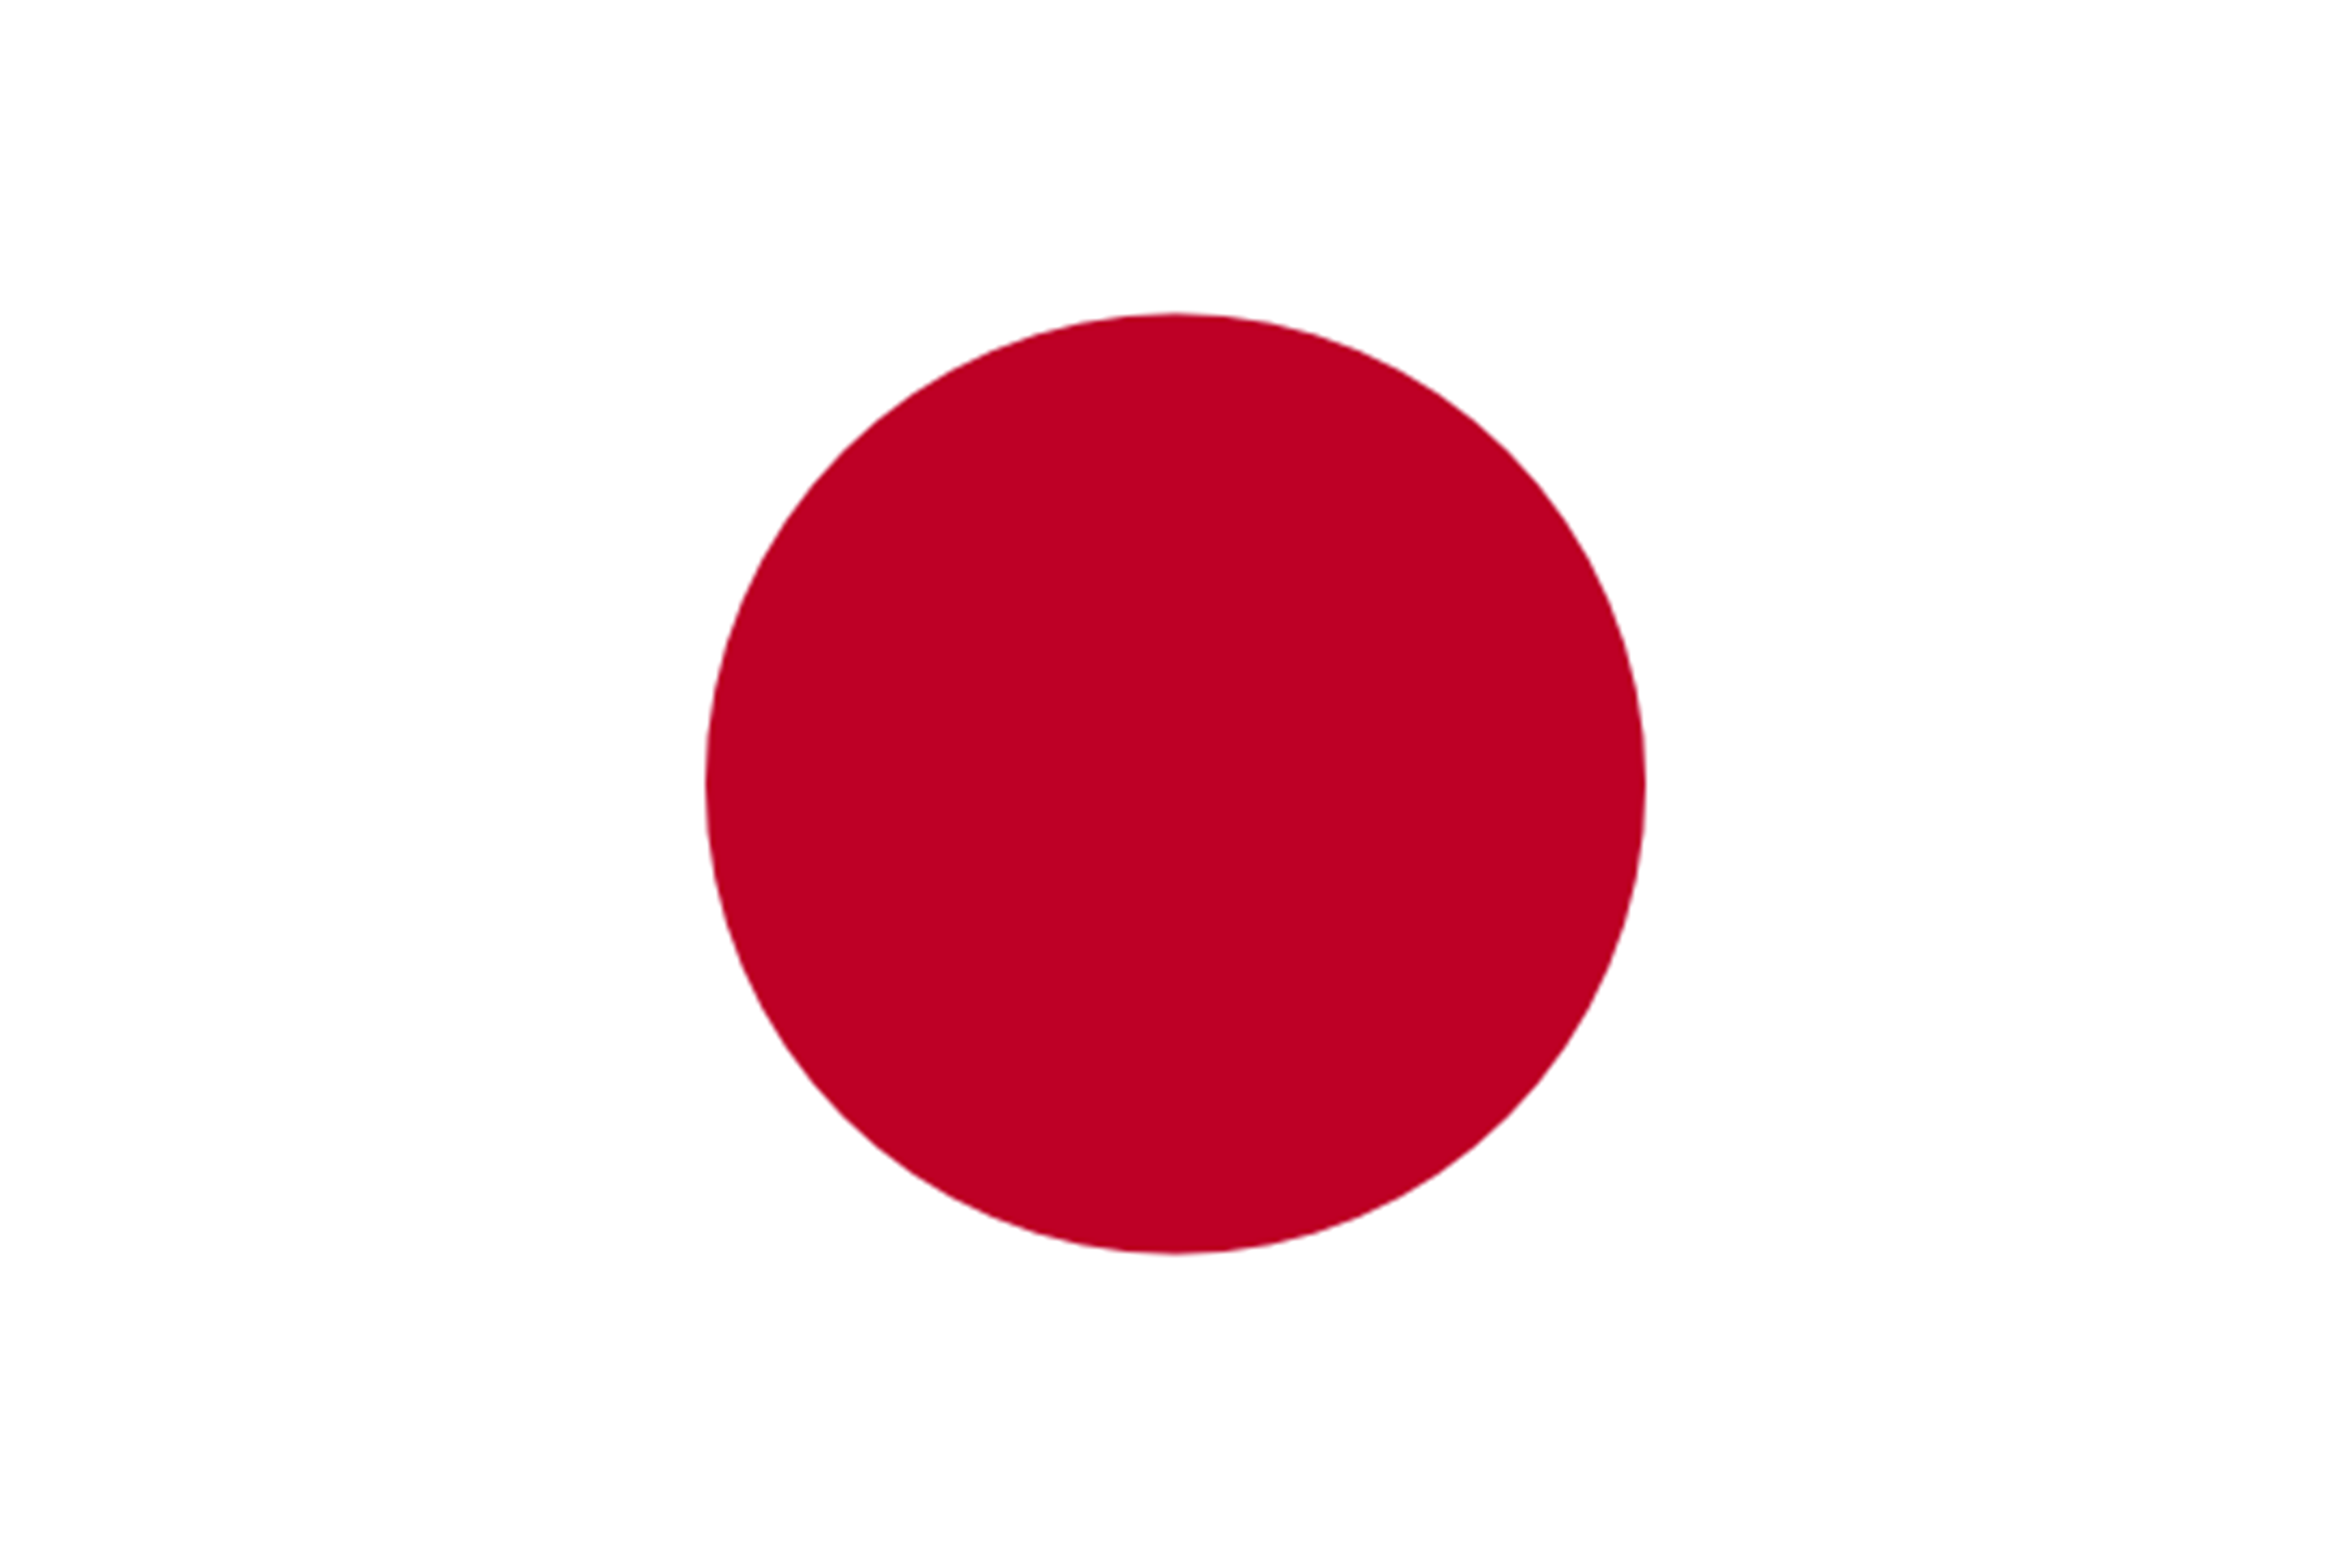 יפן